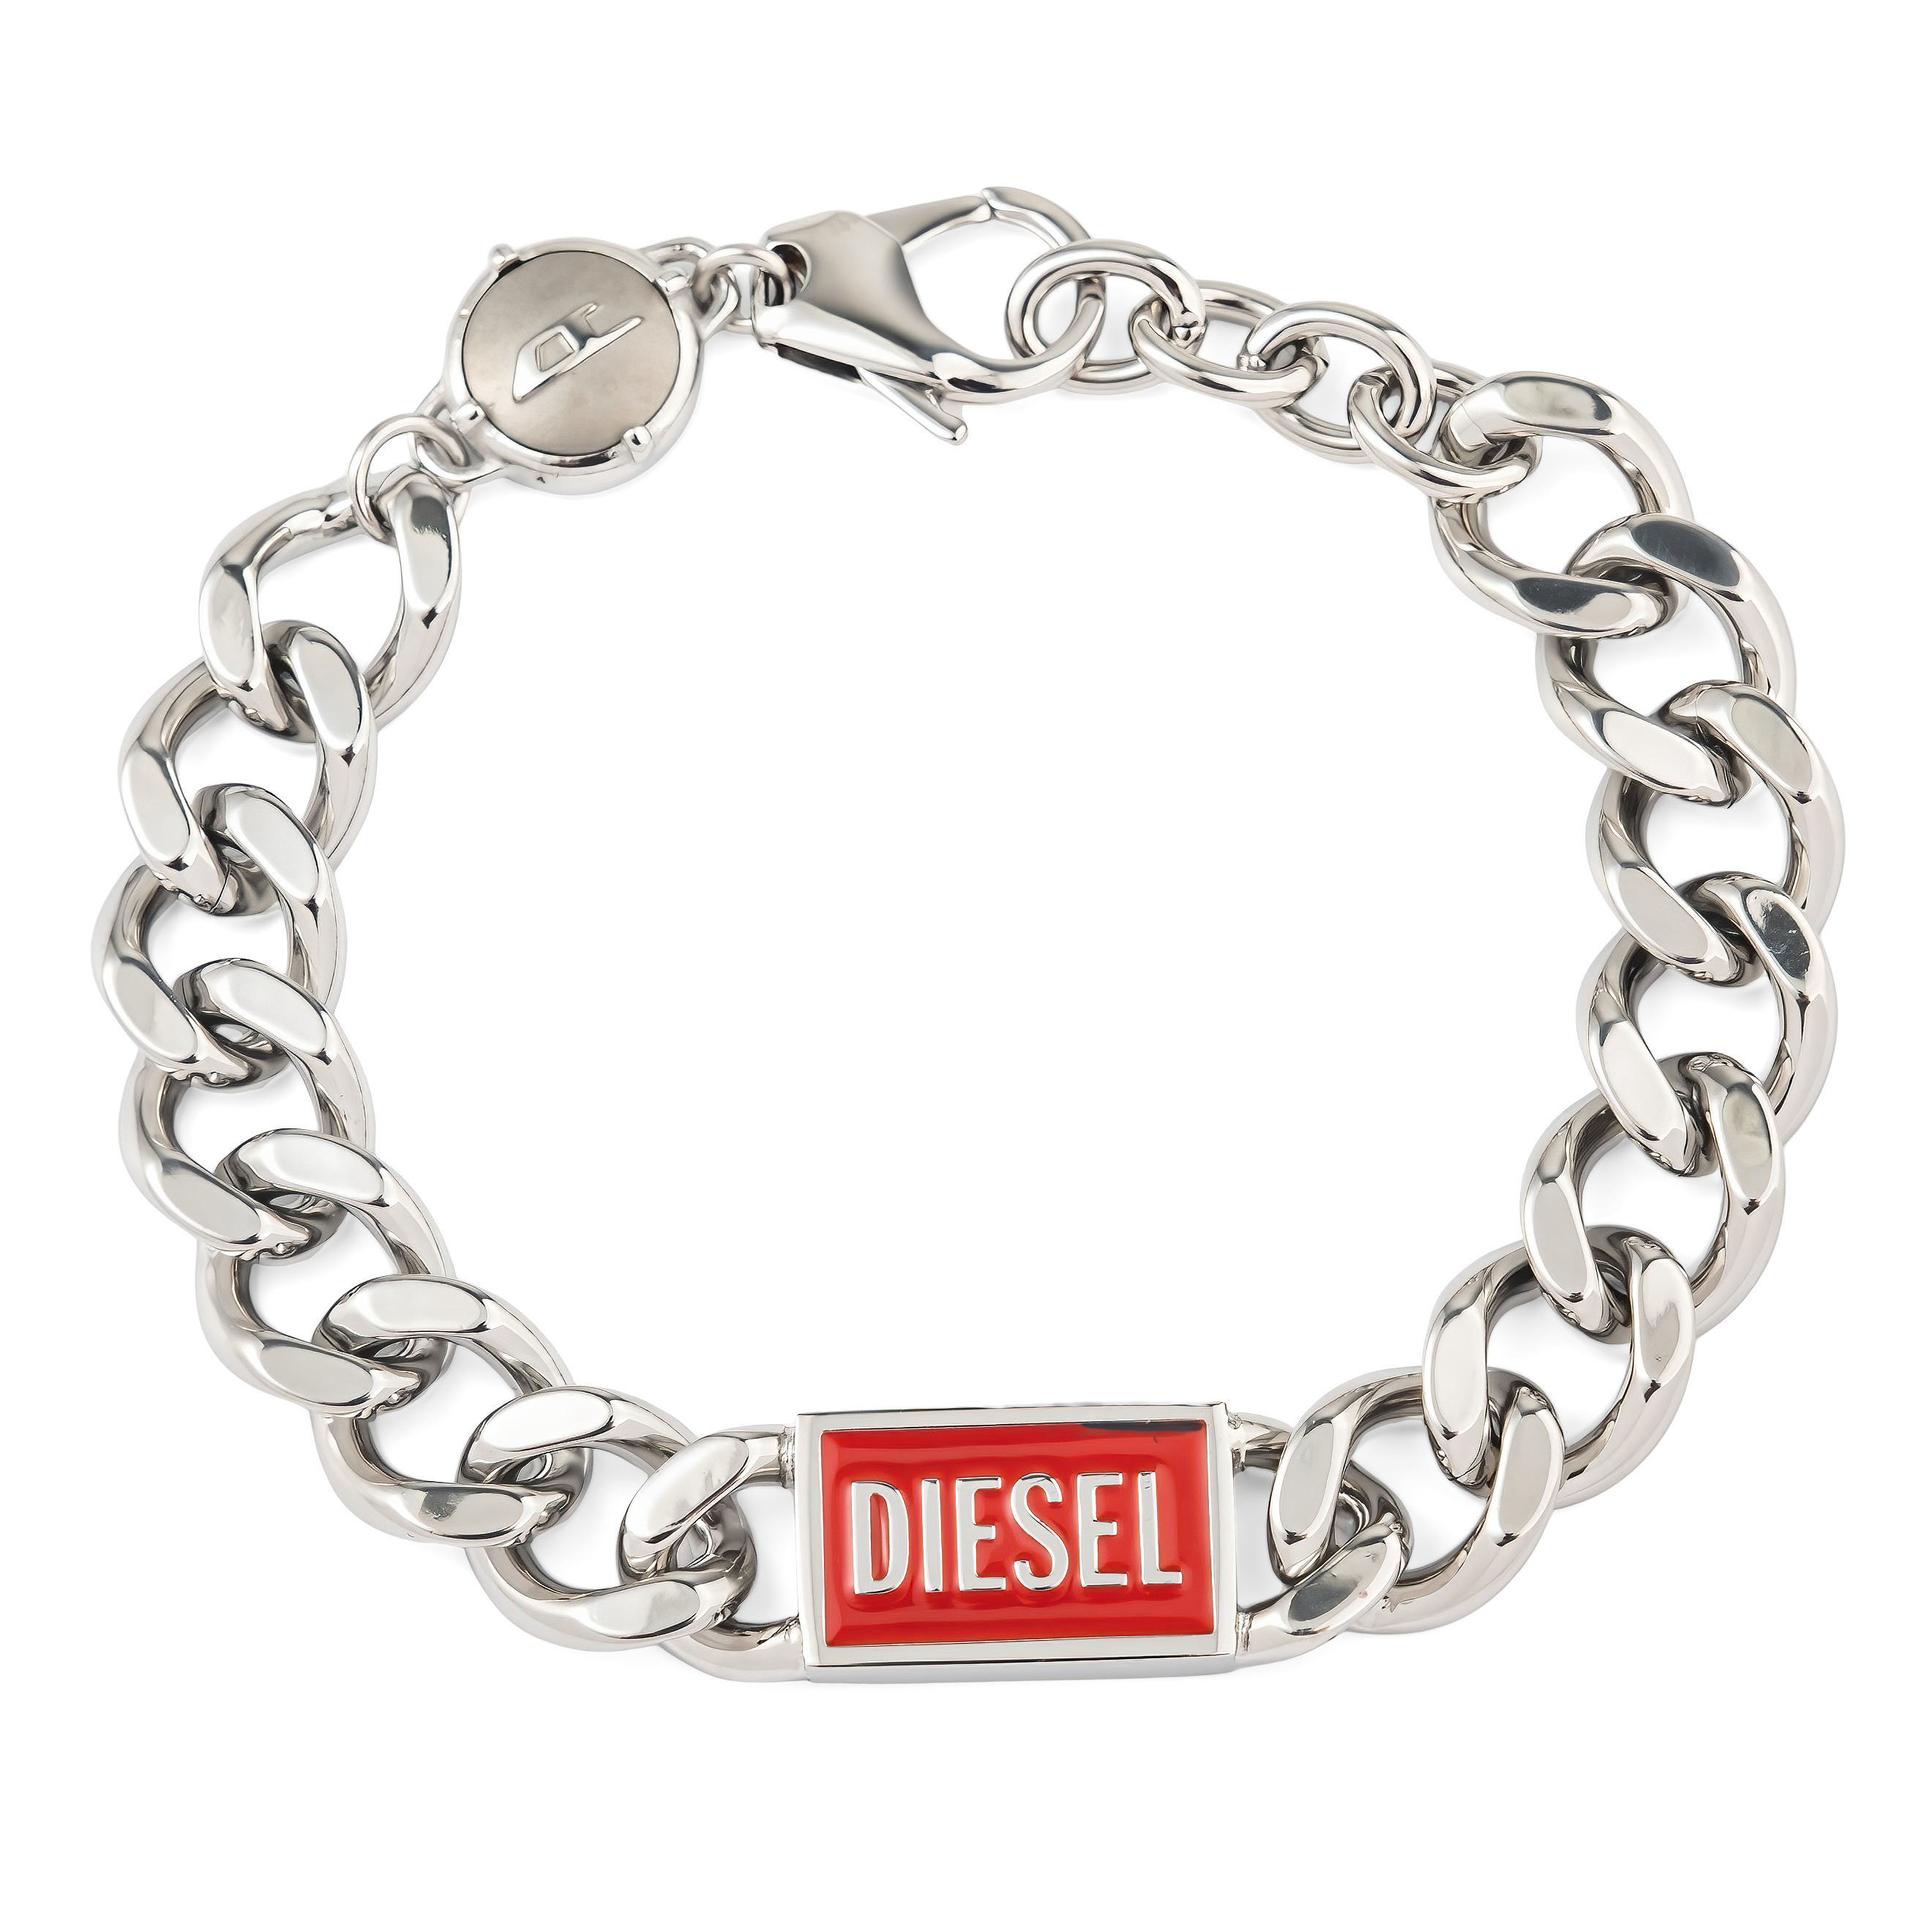 SKU Diesel Bracelet Poison store, at Chain – Drop buy online